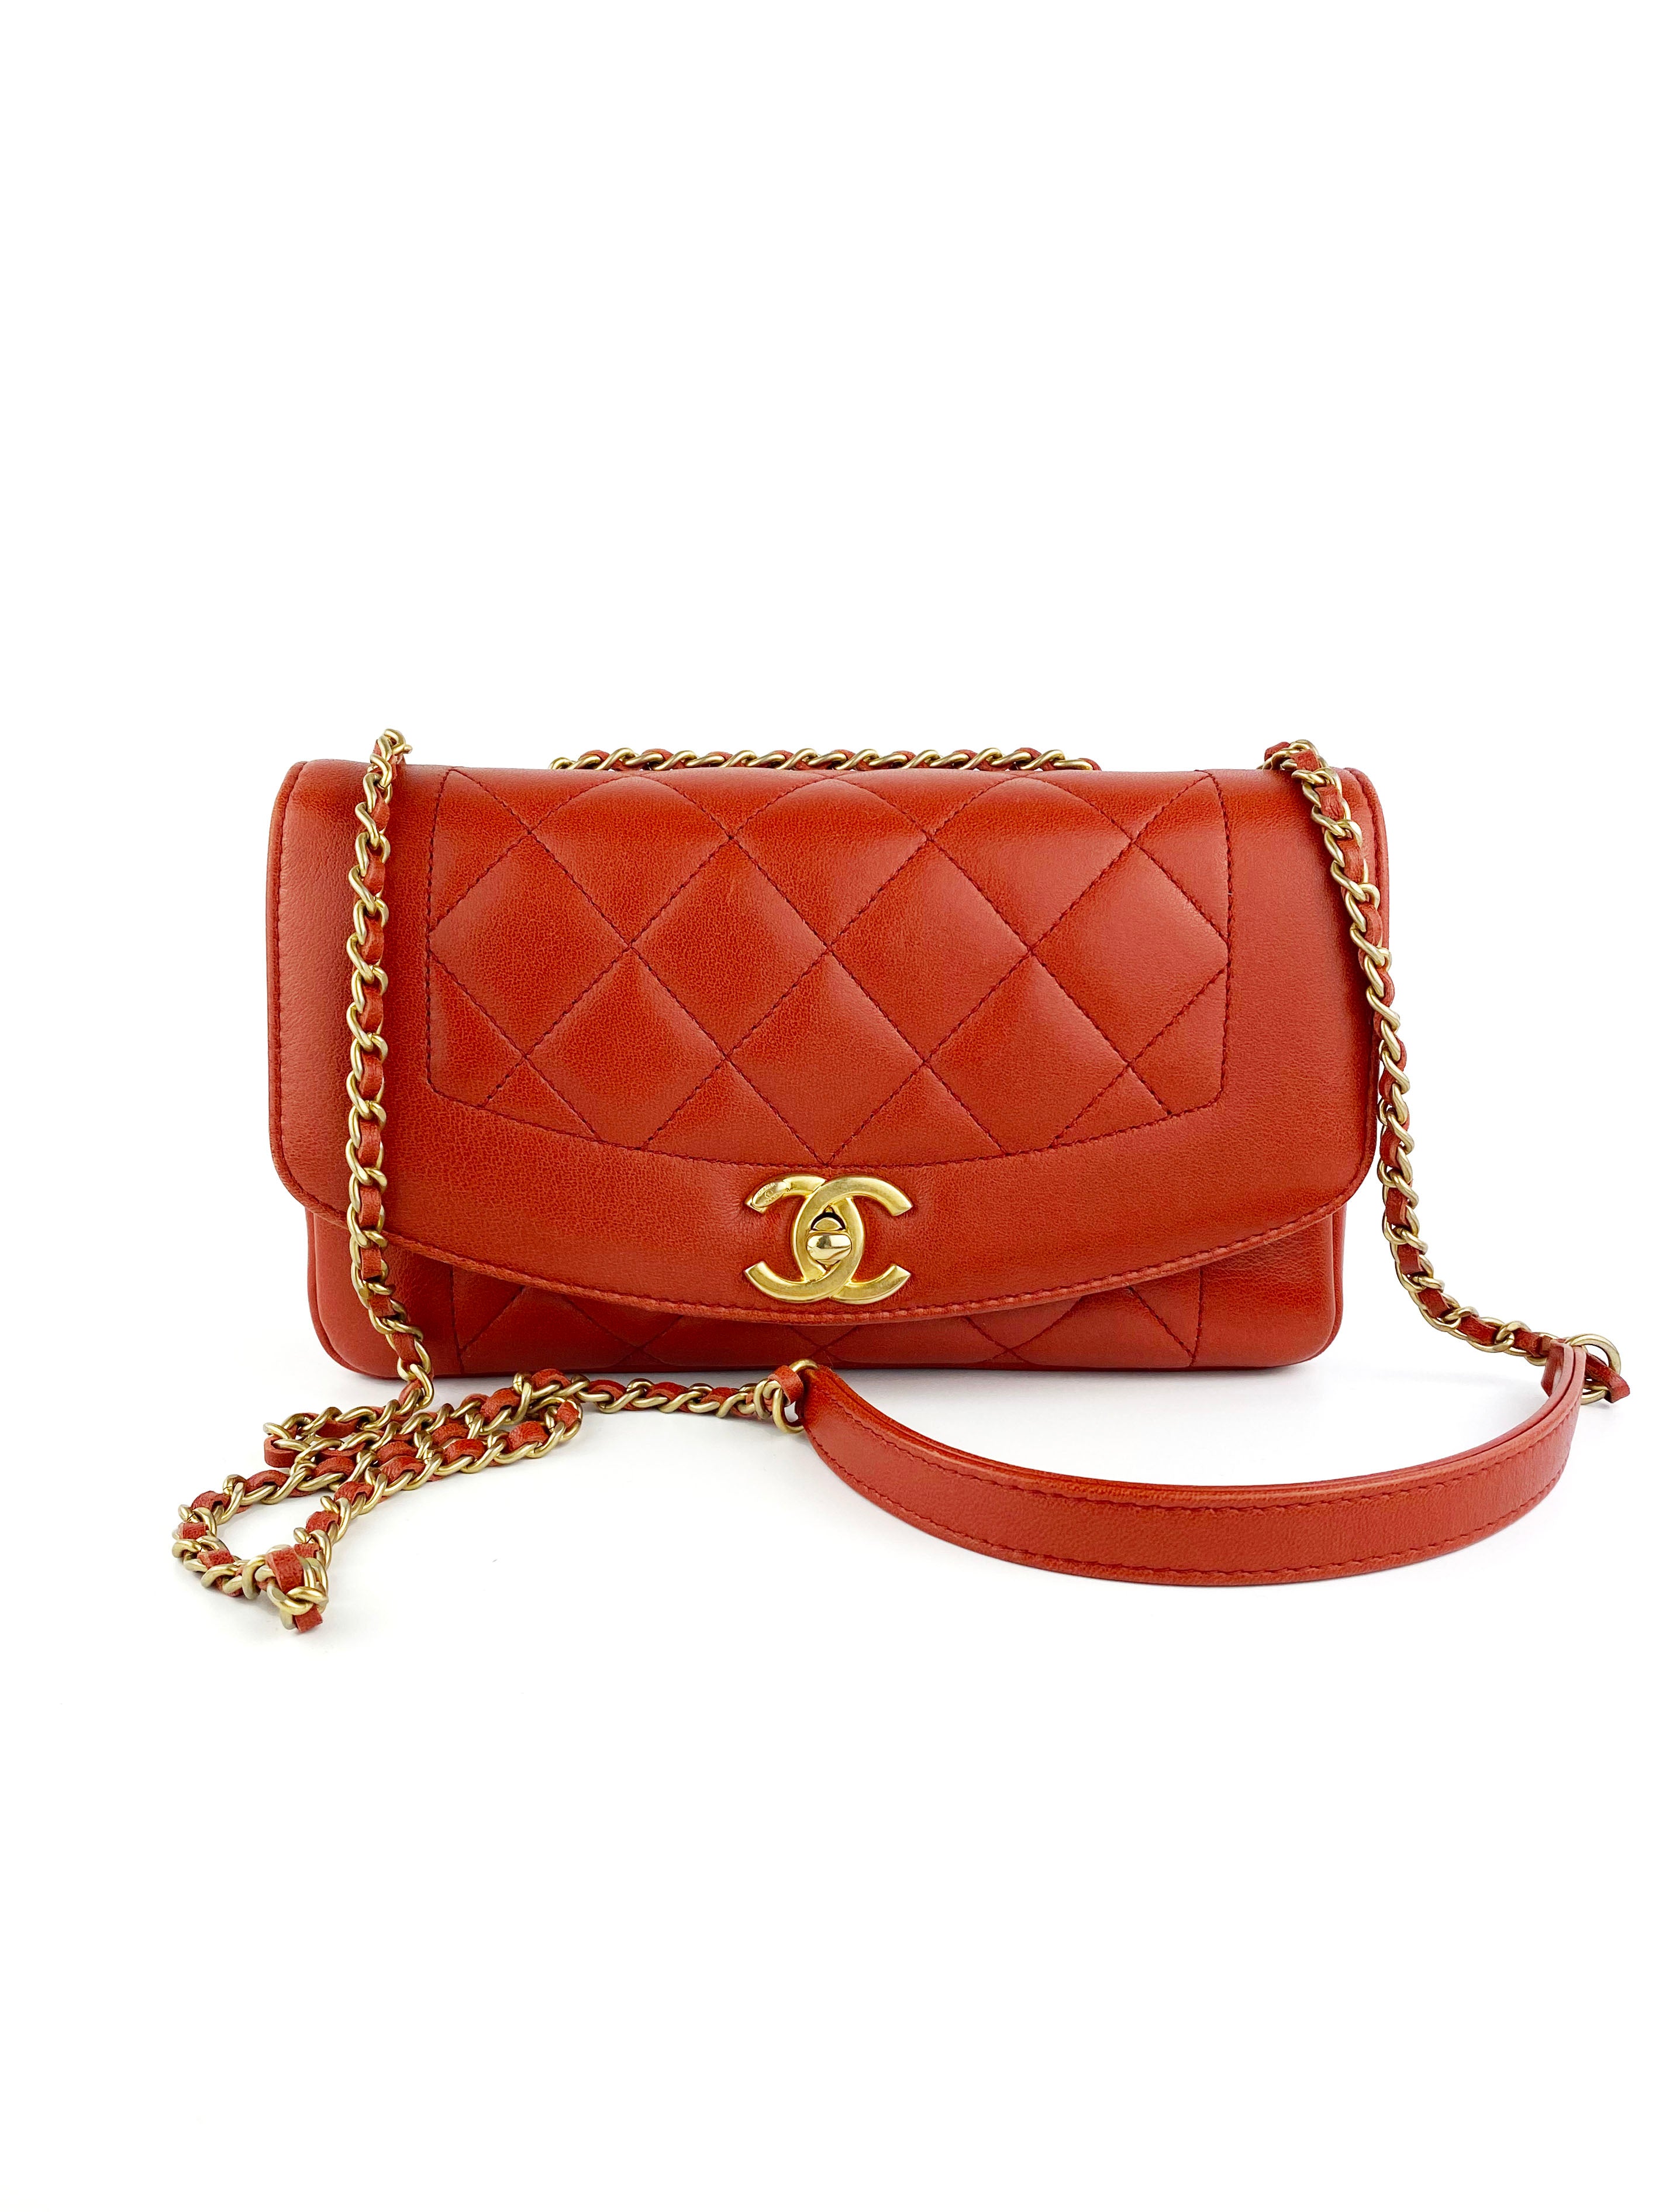 Chanel Diana Flap Bag